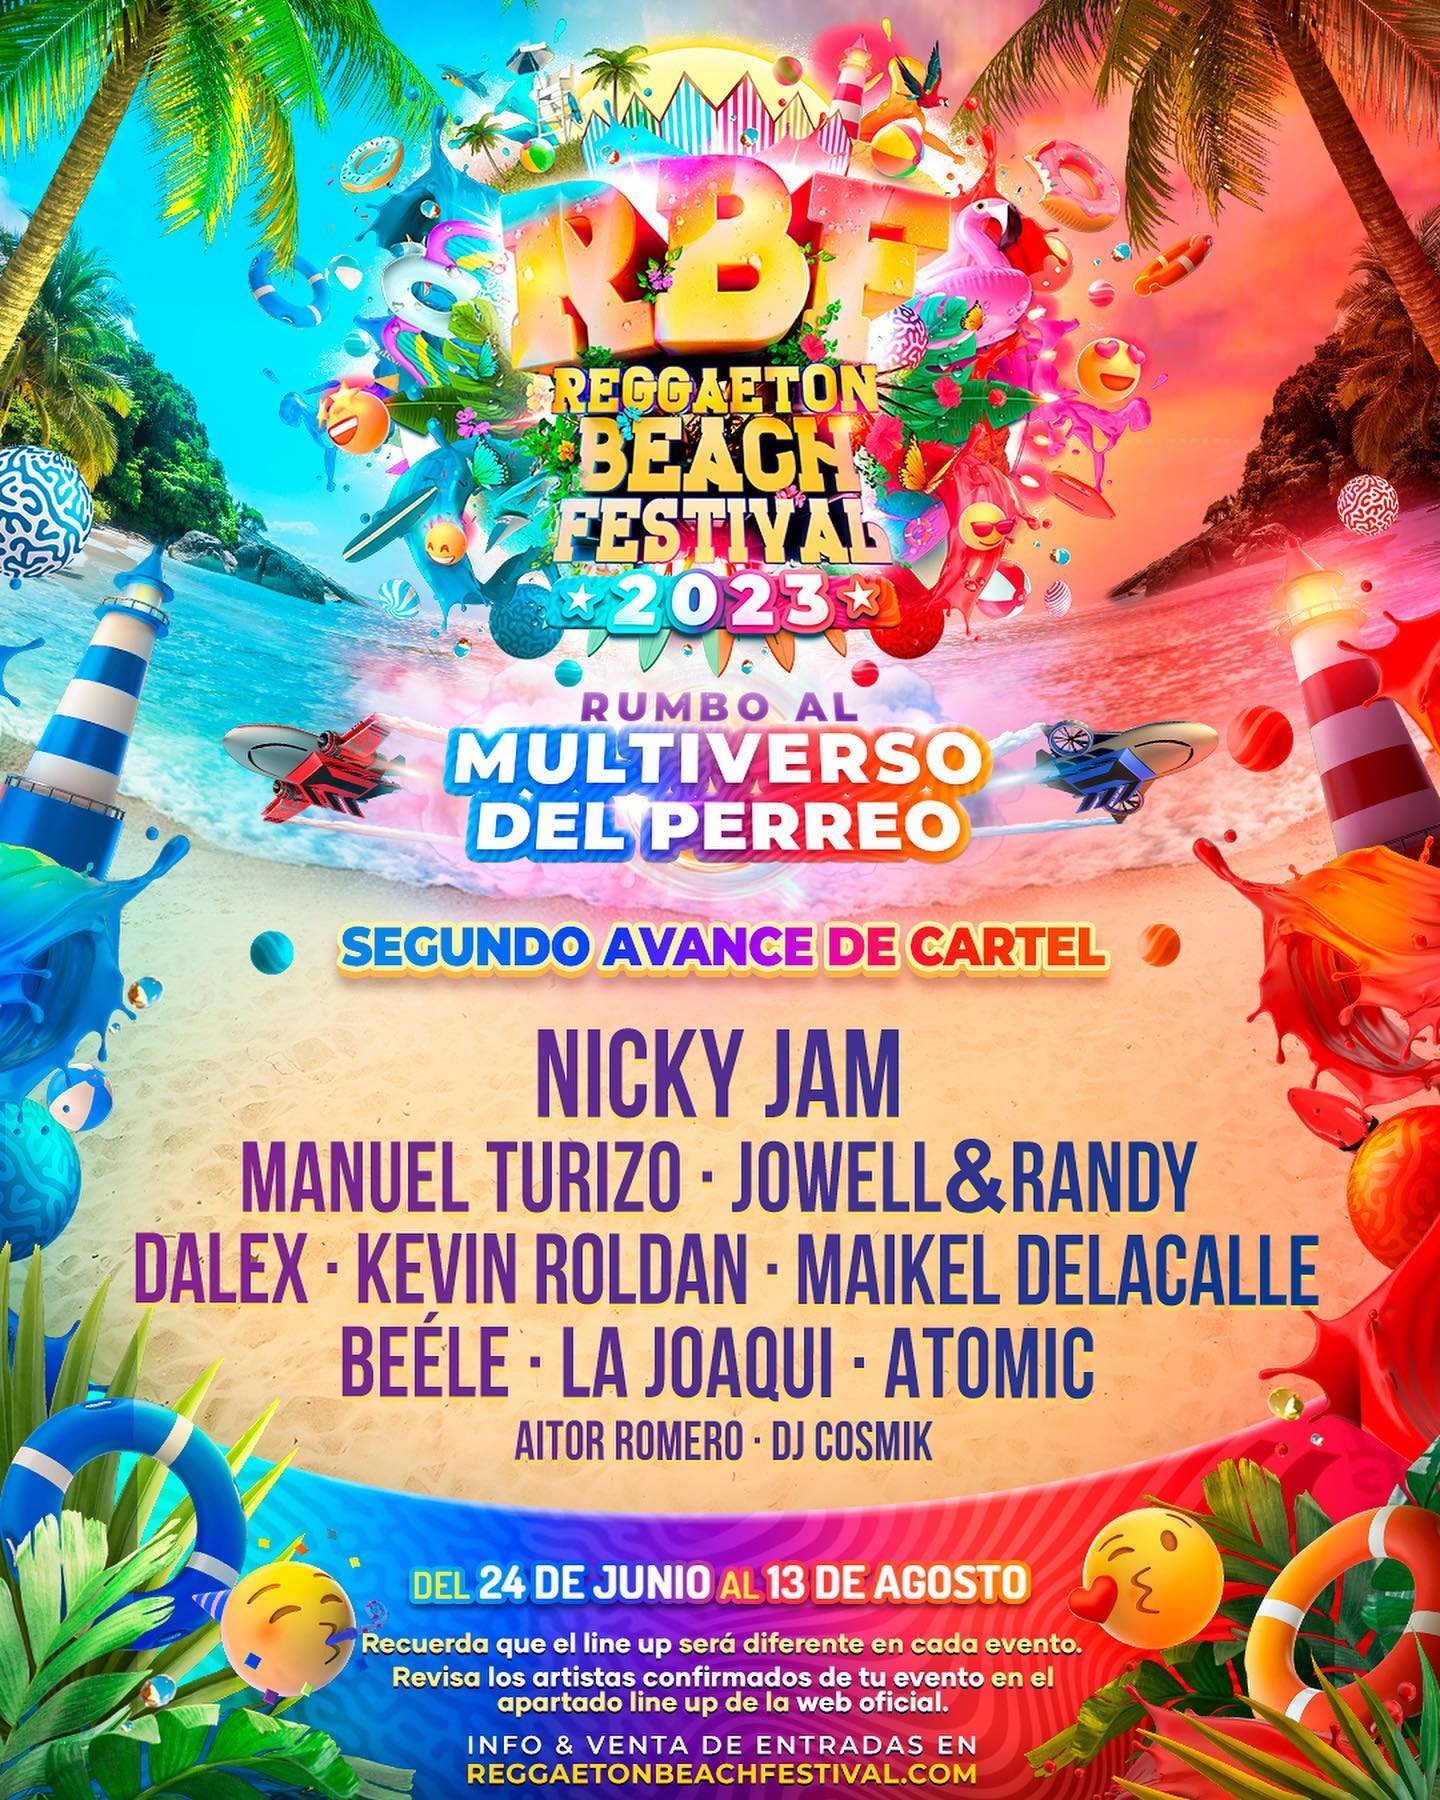 Reggaeton Beach Festival (Madrid) 2023 Cartel, entradas, horarios y